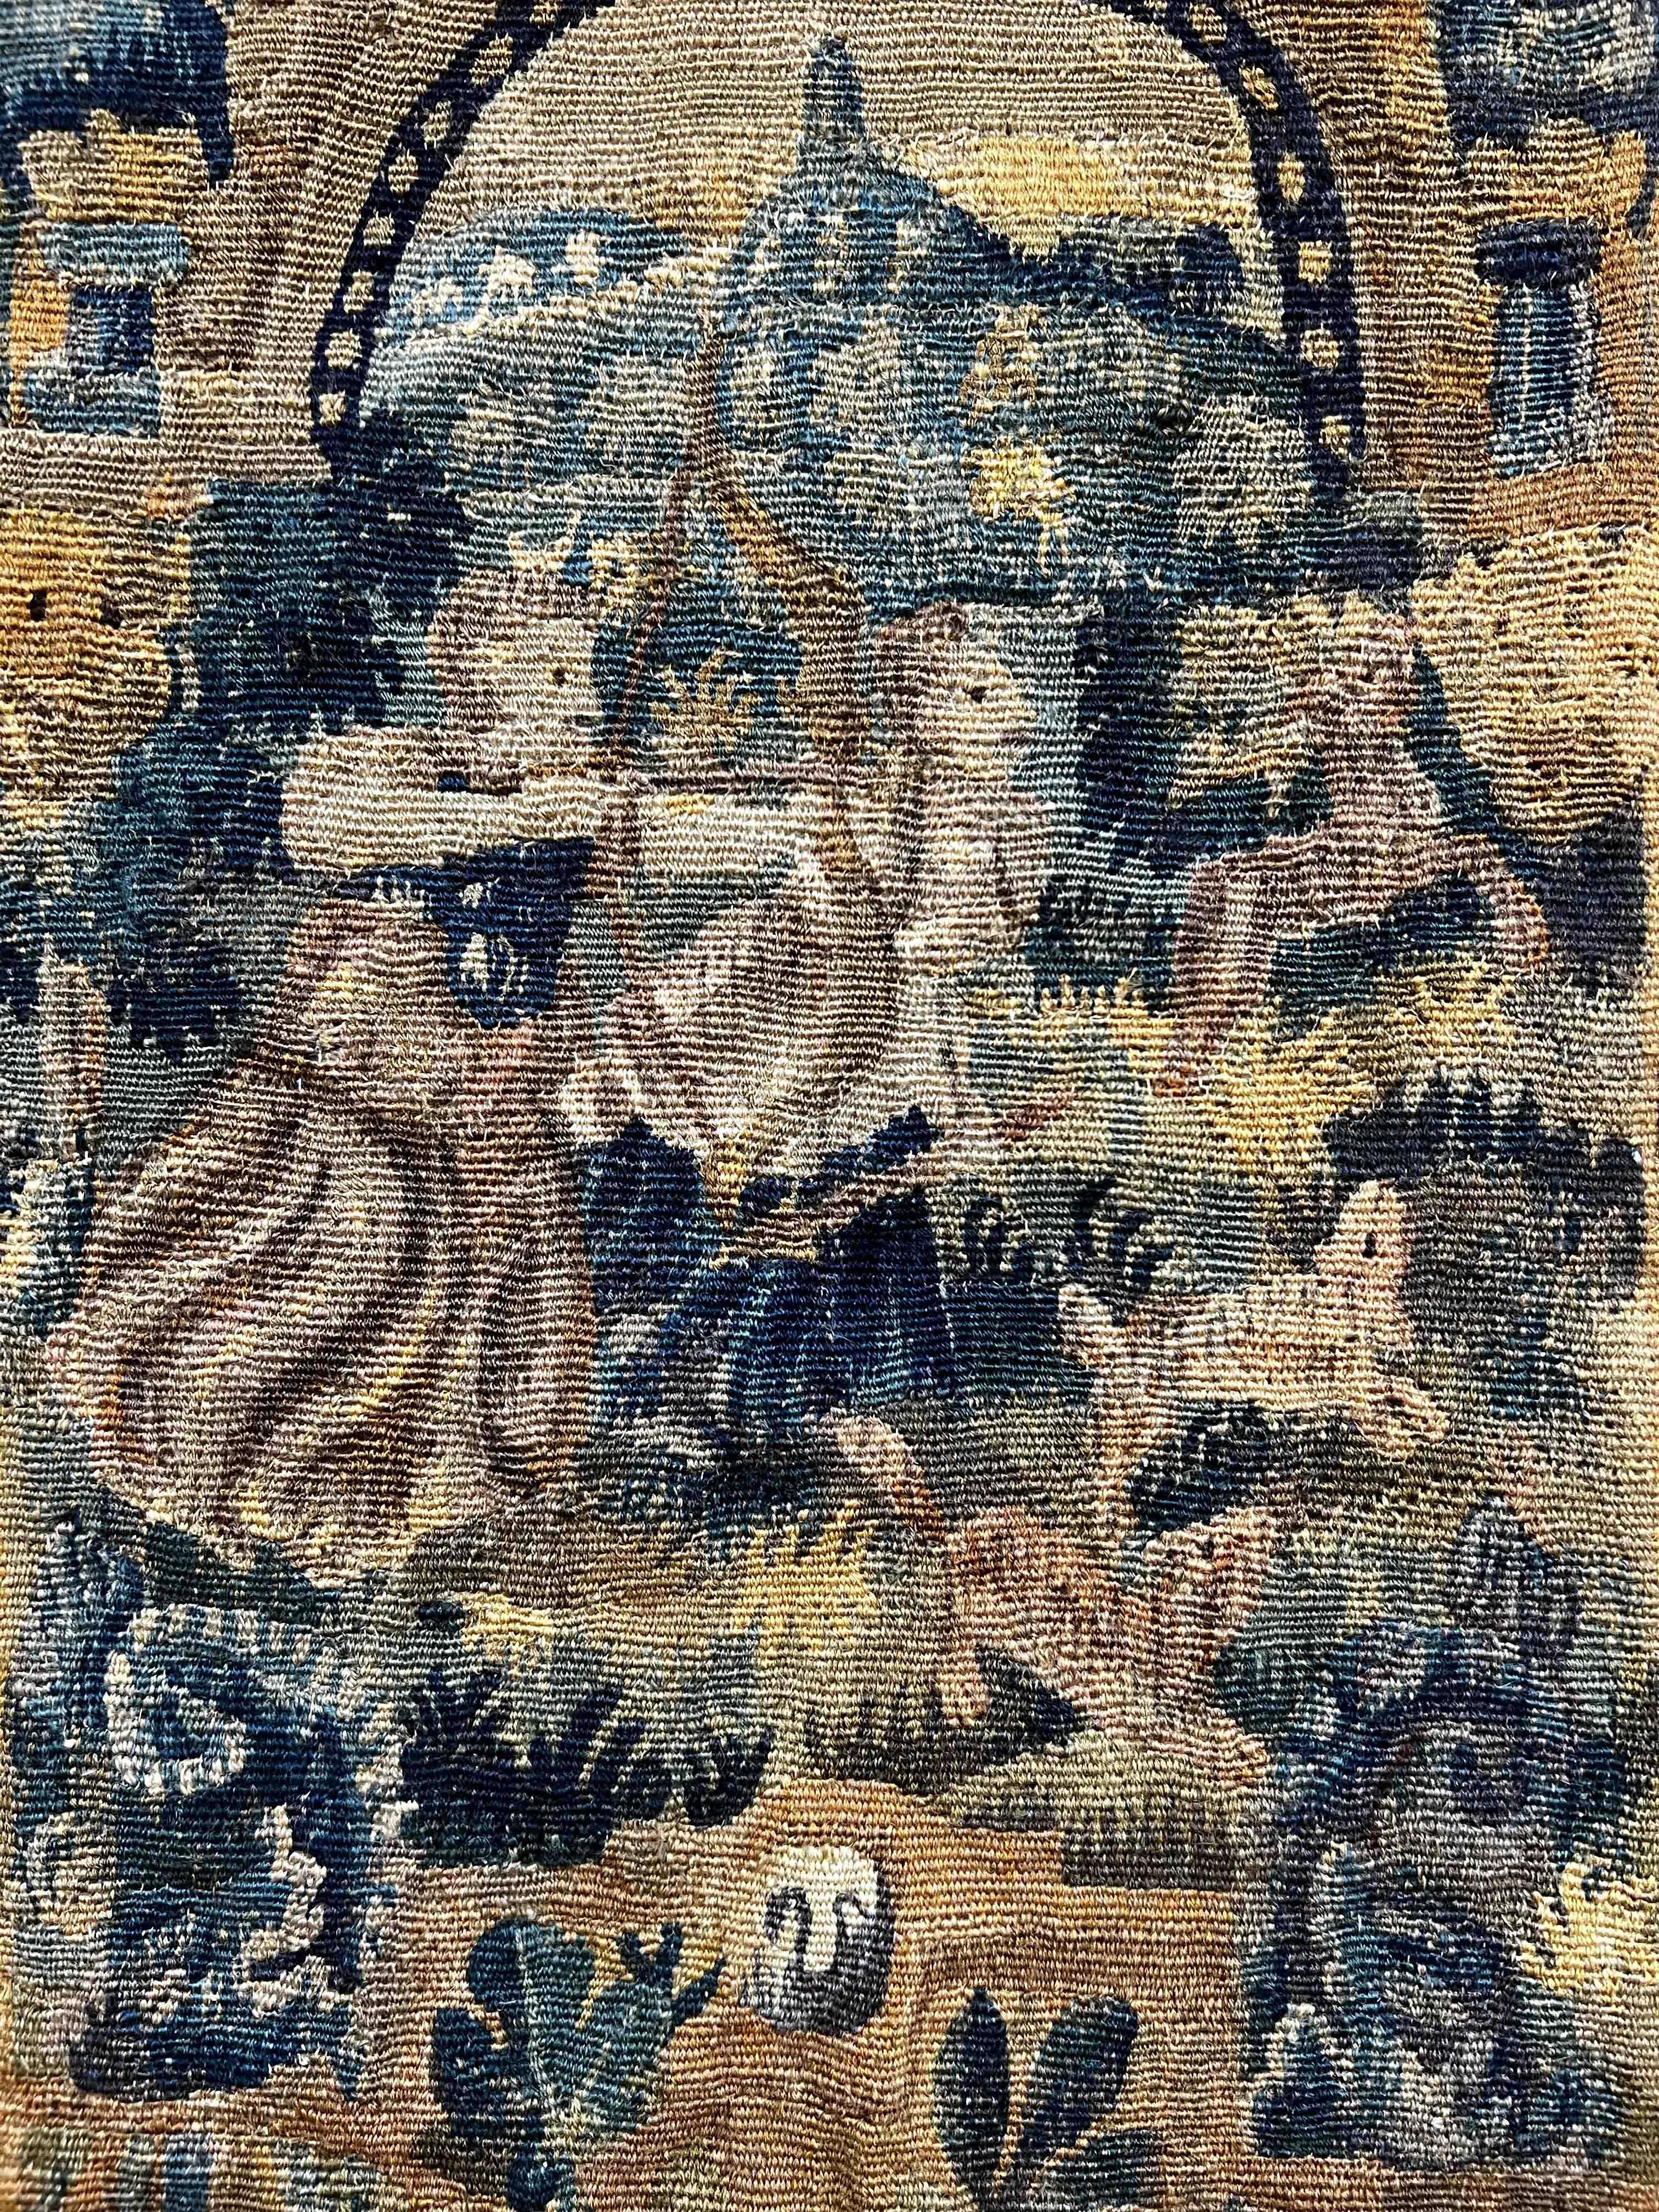 Wool 17th Century Tapestry from Flanders, N° 1184